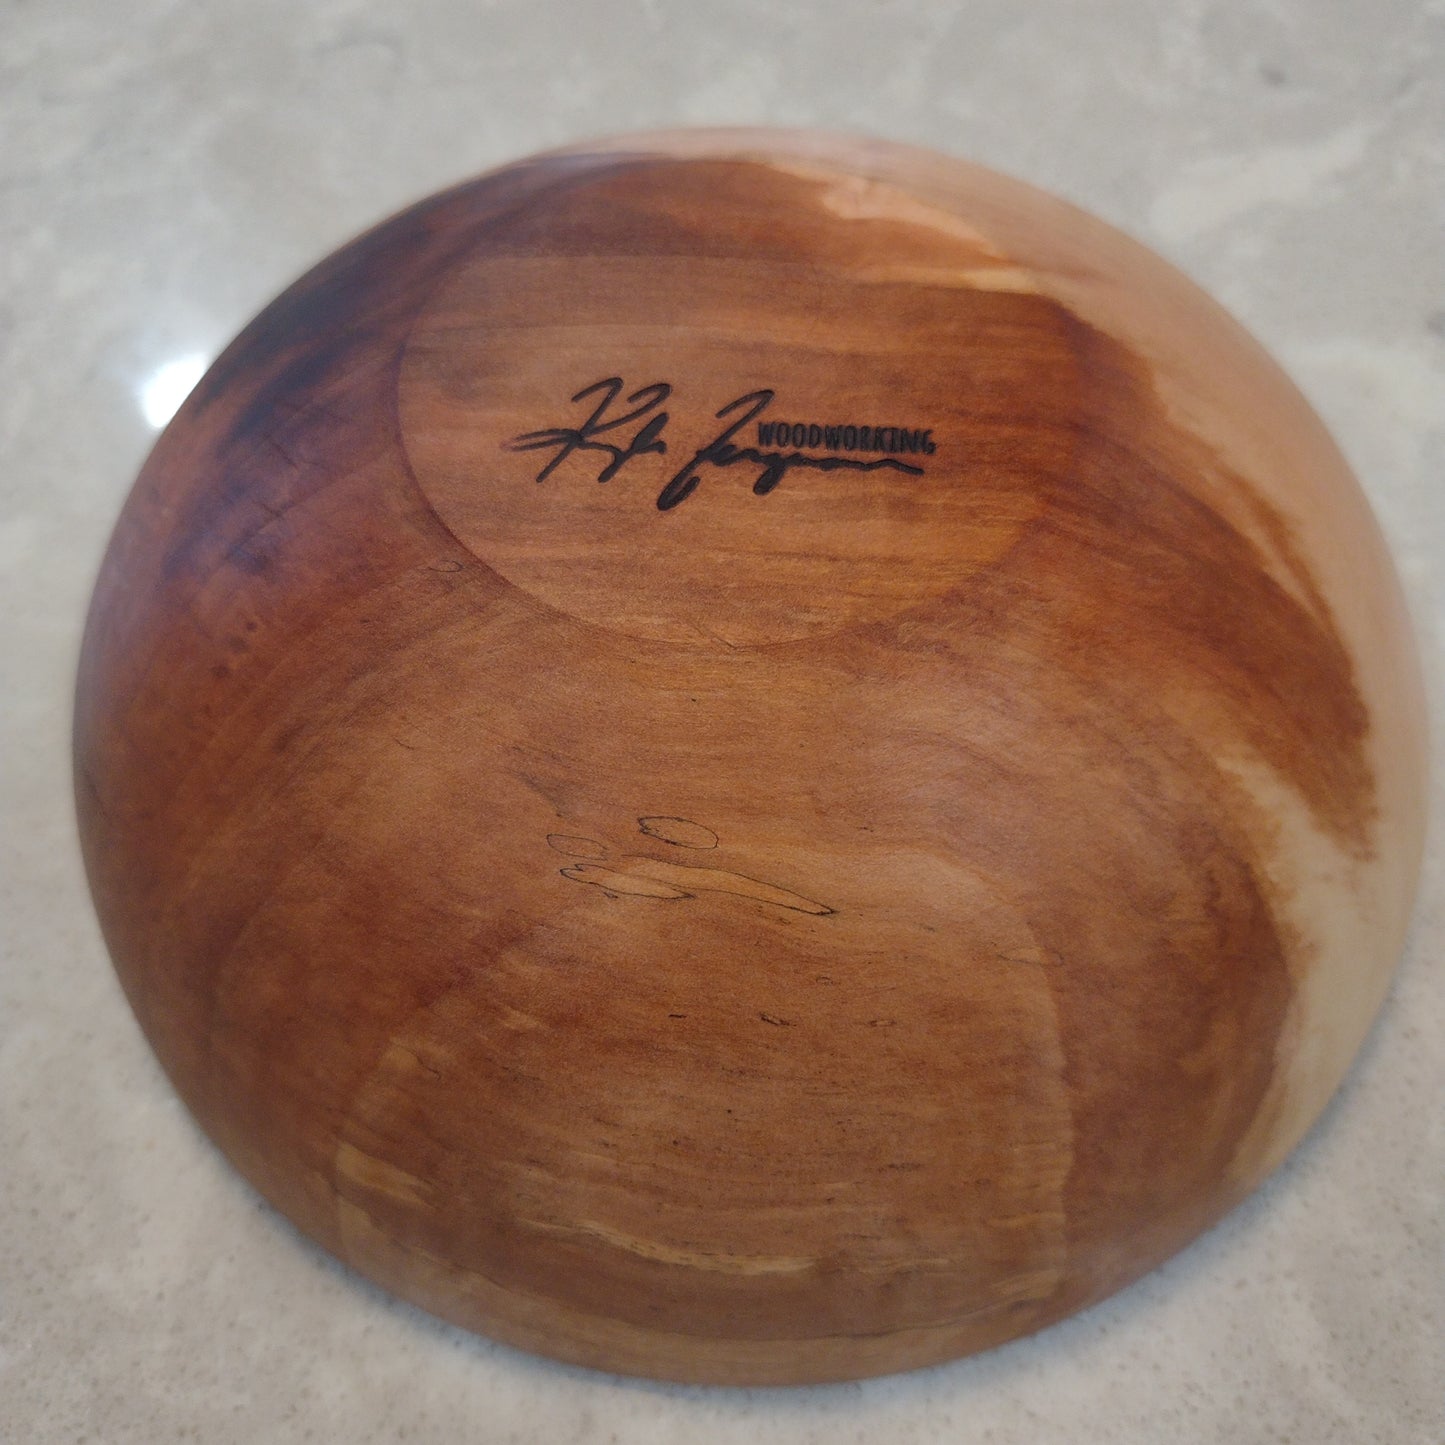 Bradford Pear bowl (6.25" x 2.5")